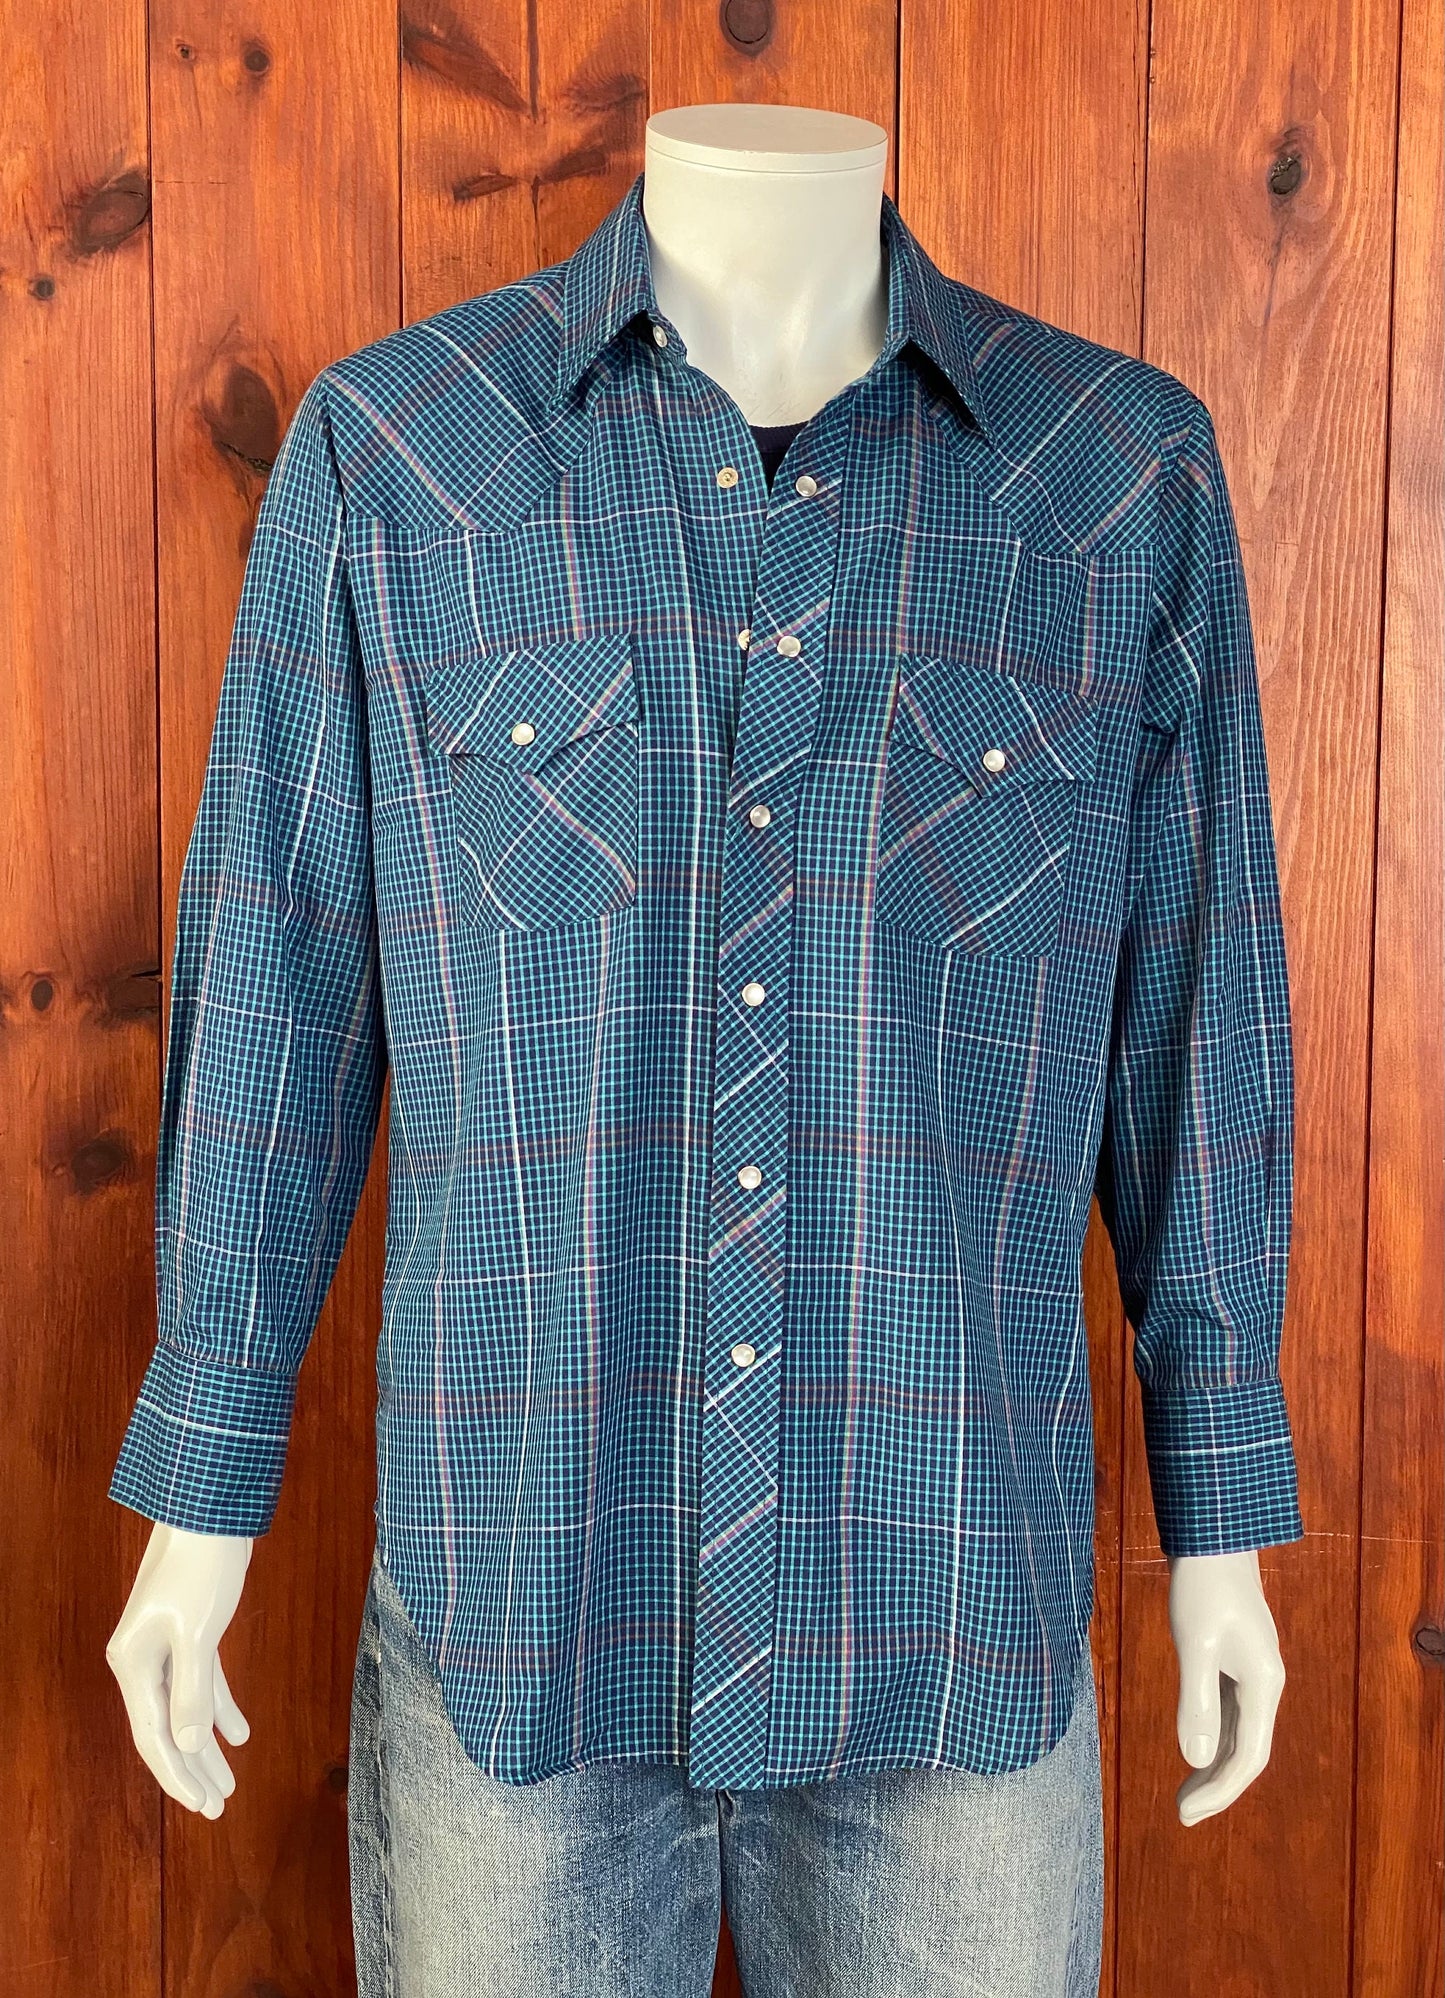 Size L. Vintage 80s plaid western shirt made by Plainsman.